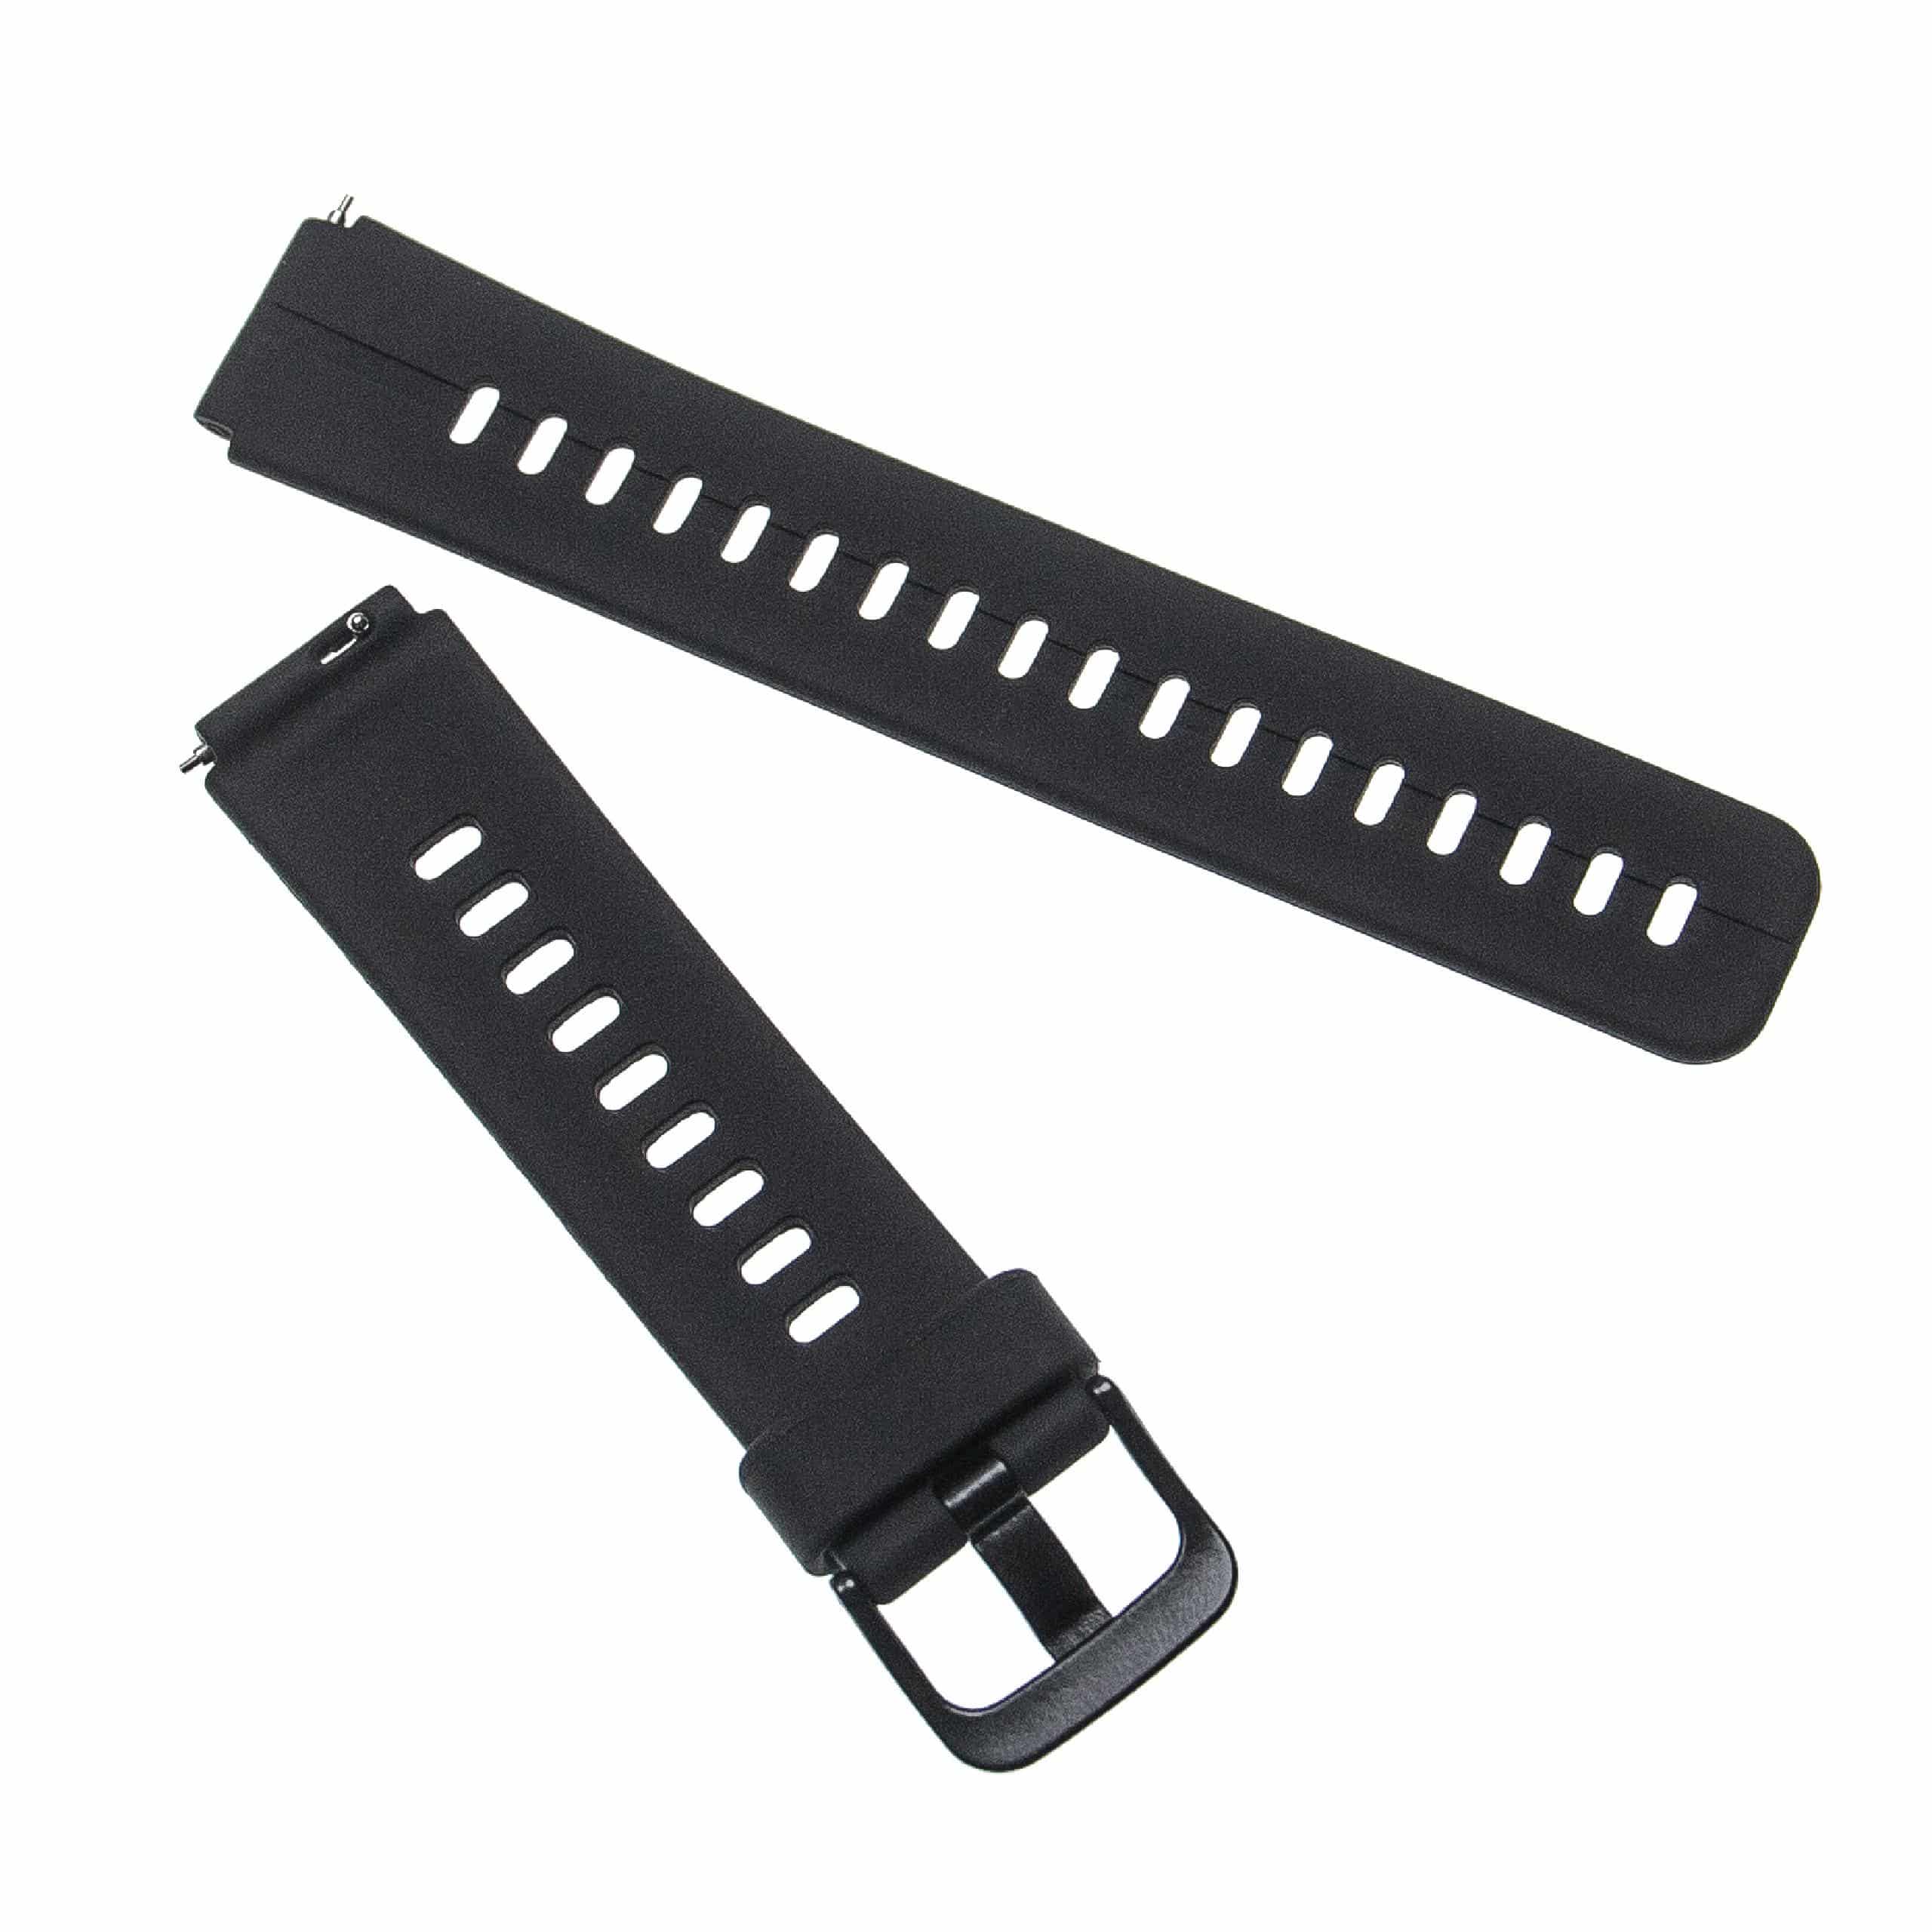 cinturino per Huawei Smartwatch - 11,2 + 8,8 cm lunghezza, 16mm ampiezza, silicone, nero